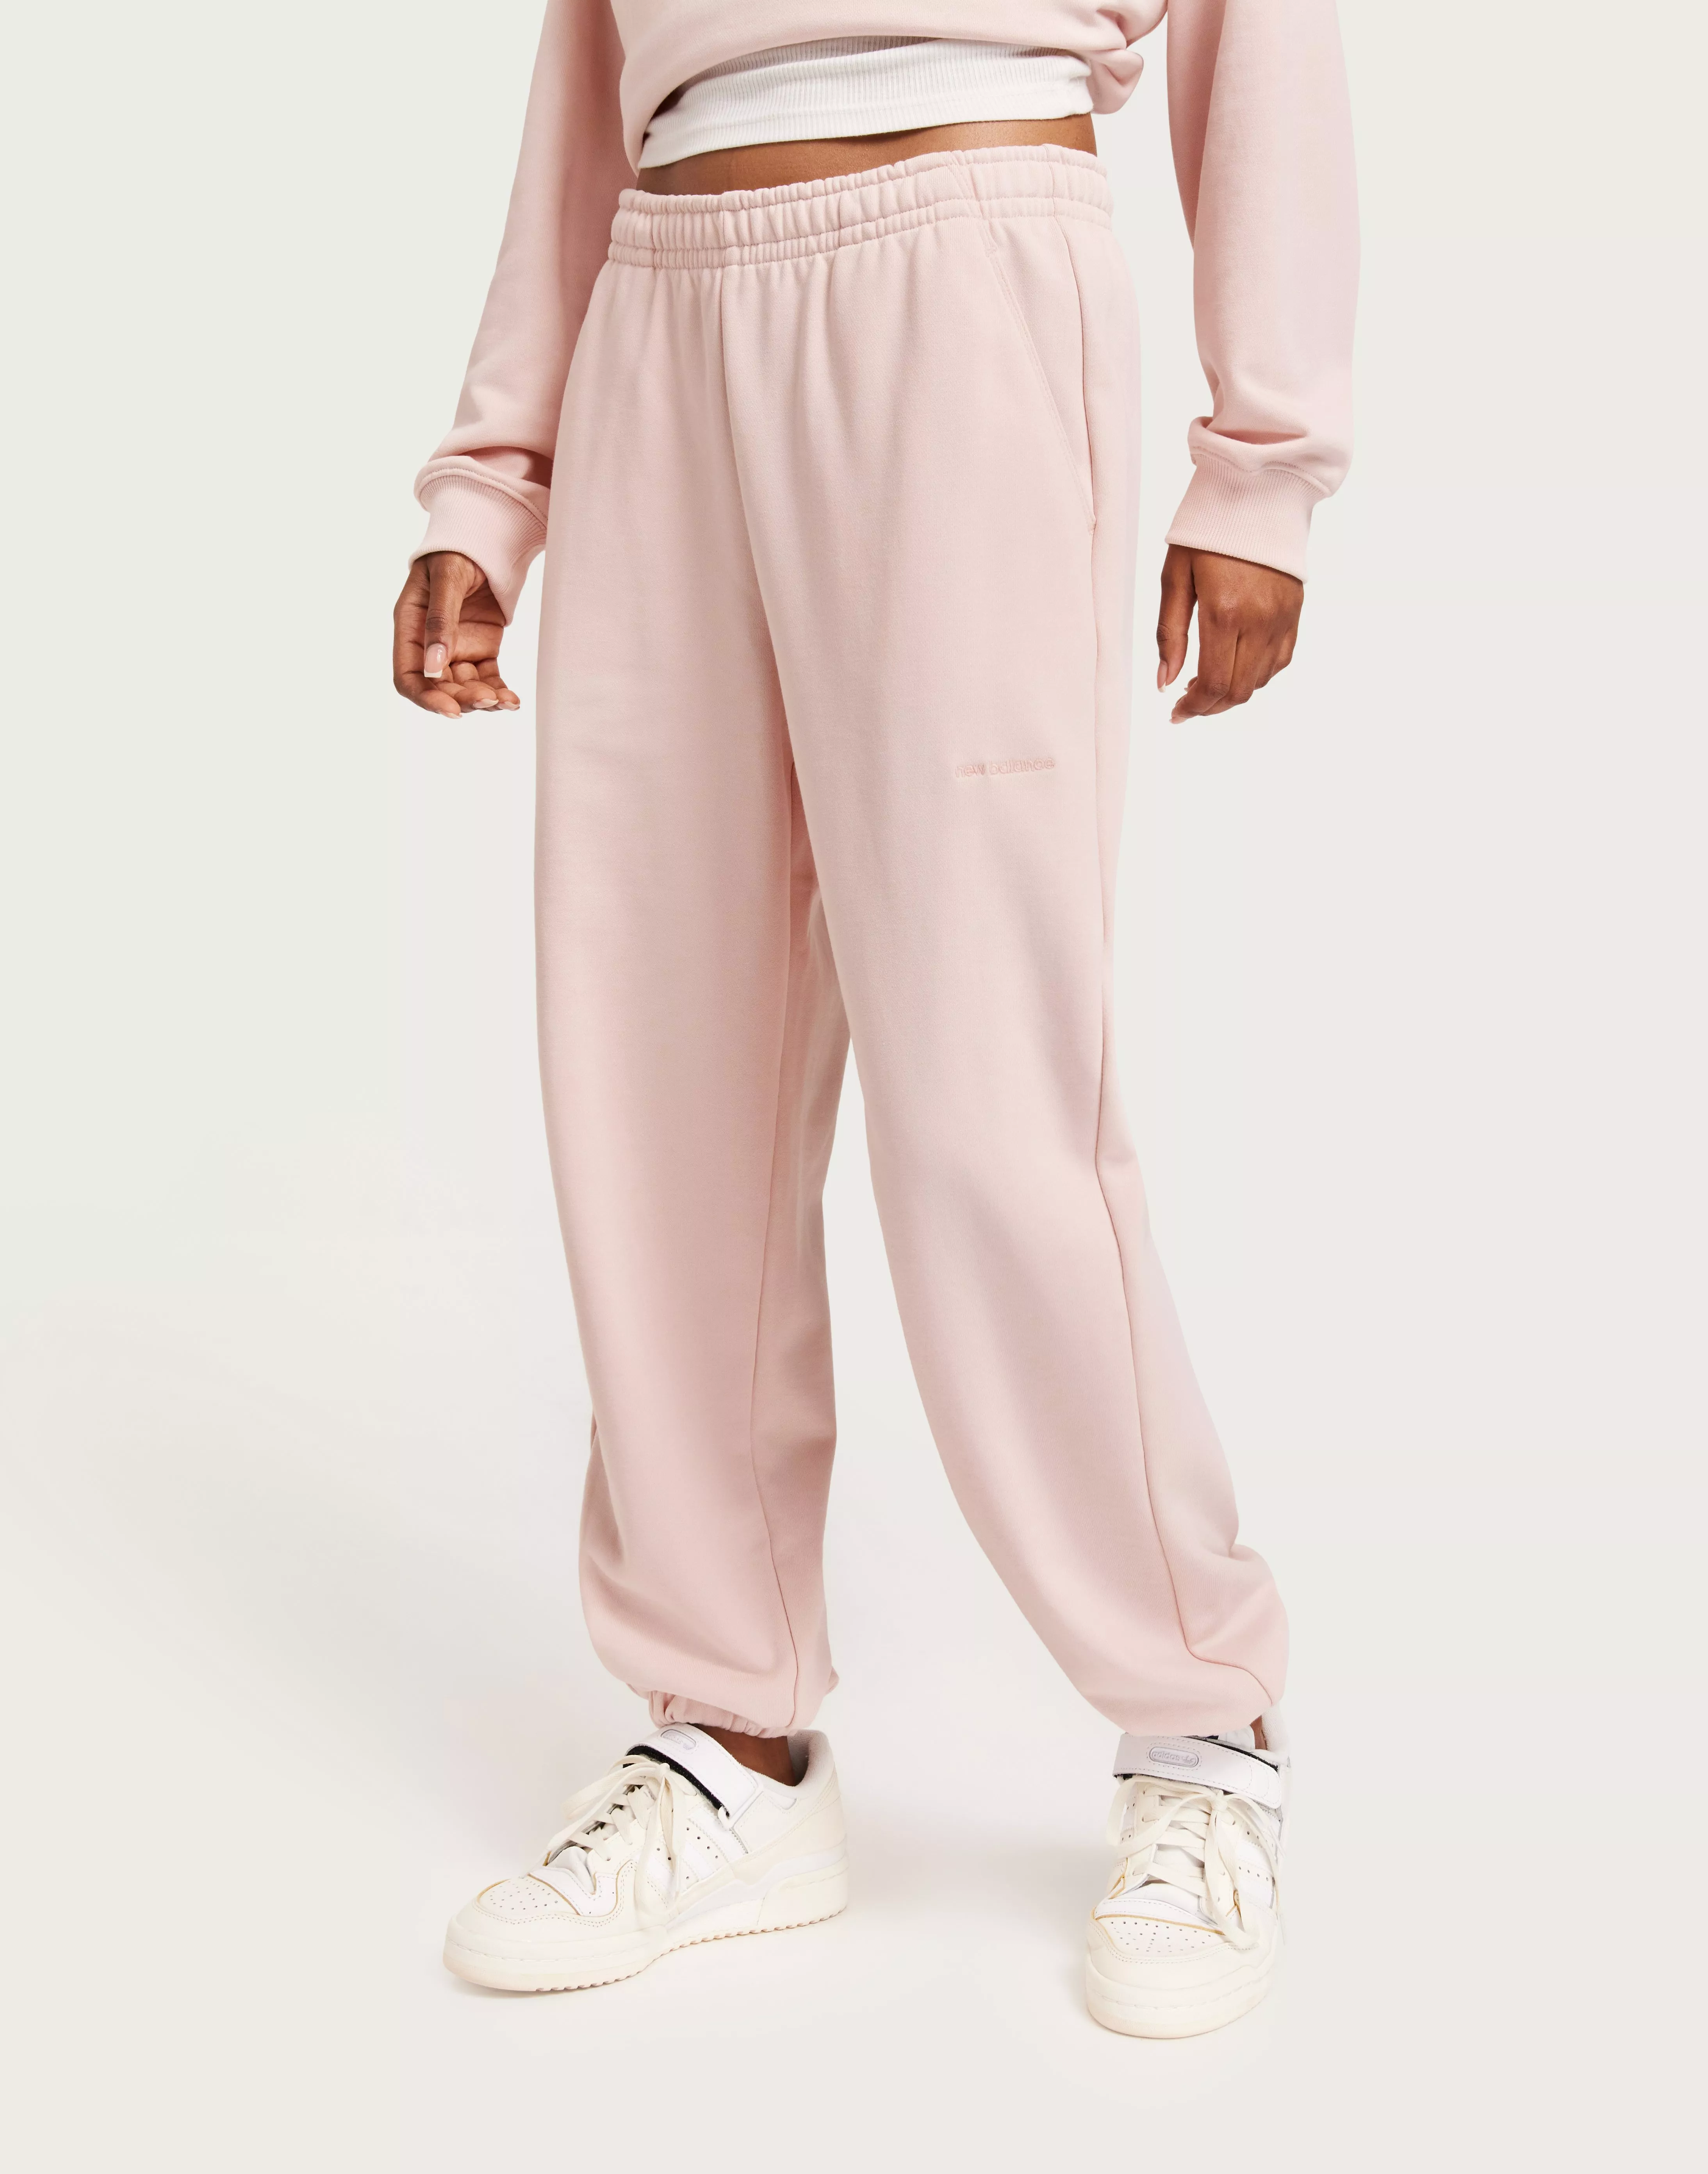 New Balance Unisex Essentials Pants Mens Women Pink Sportswear Sweatpants 